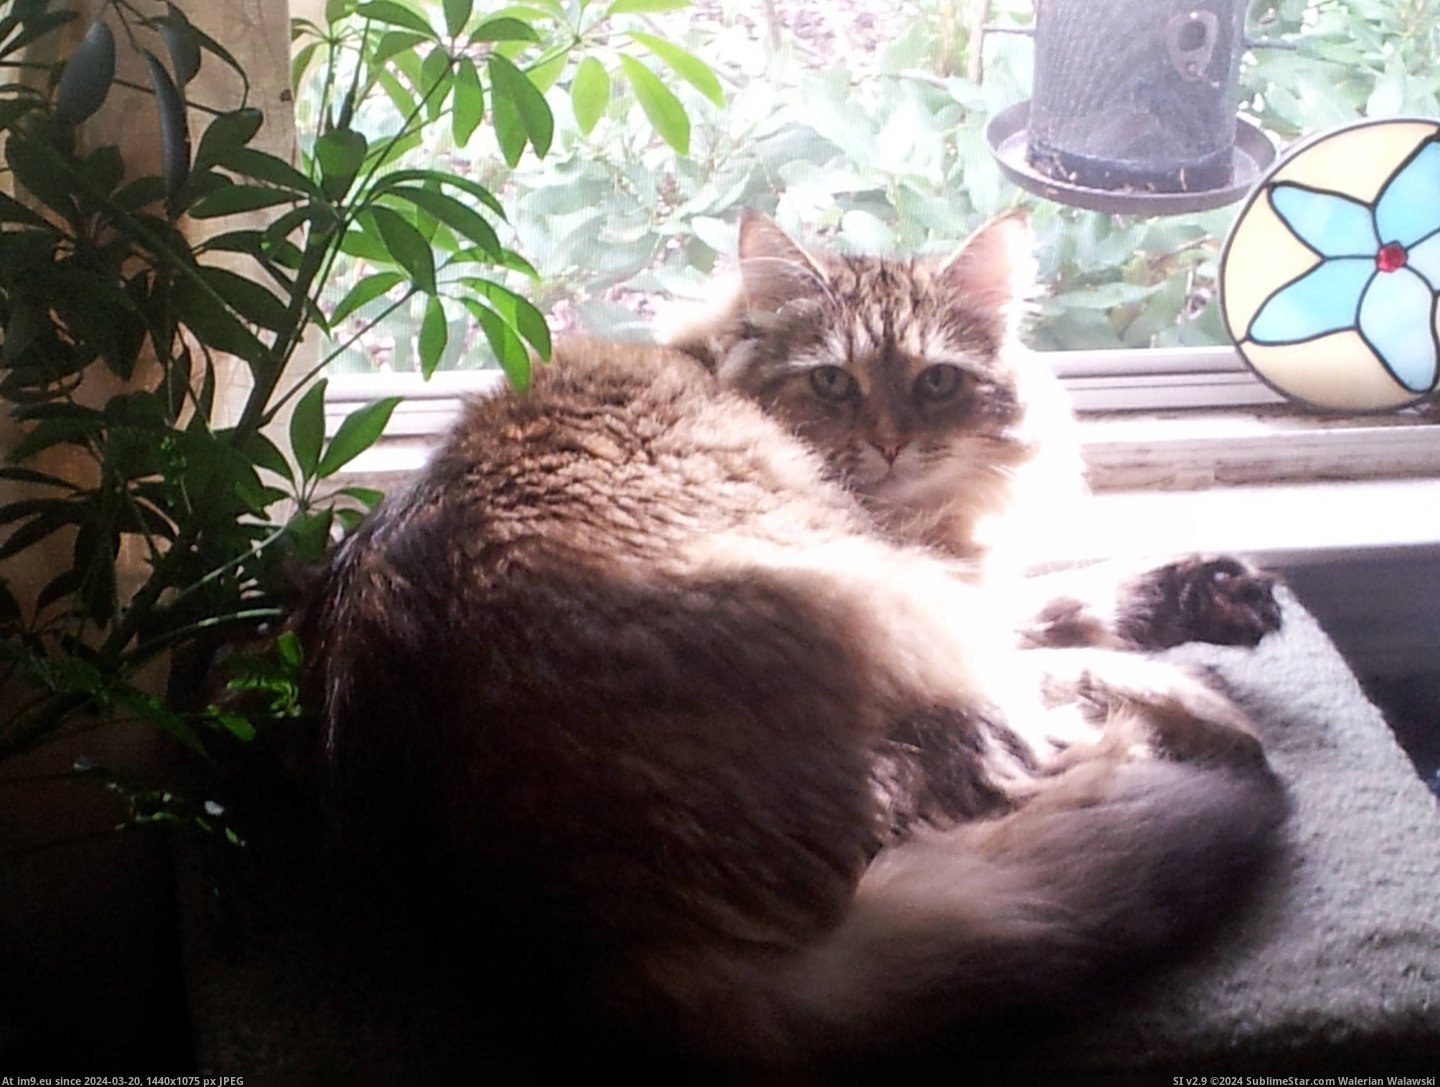 #Cats #How #Kisa #Sits #Sleeps [Cats] How Kisa sits and sleeps 9 Pic. (Изображение из альбом My r/CATS favs))